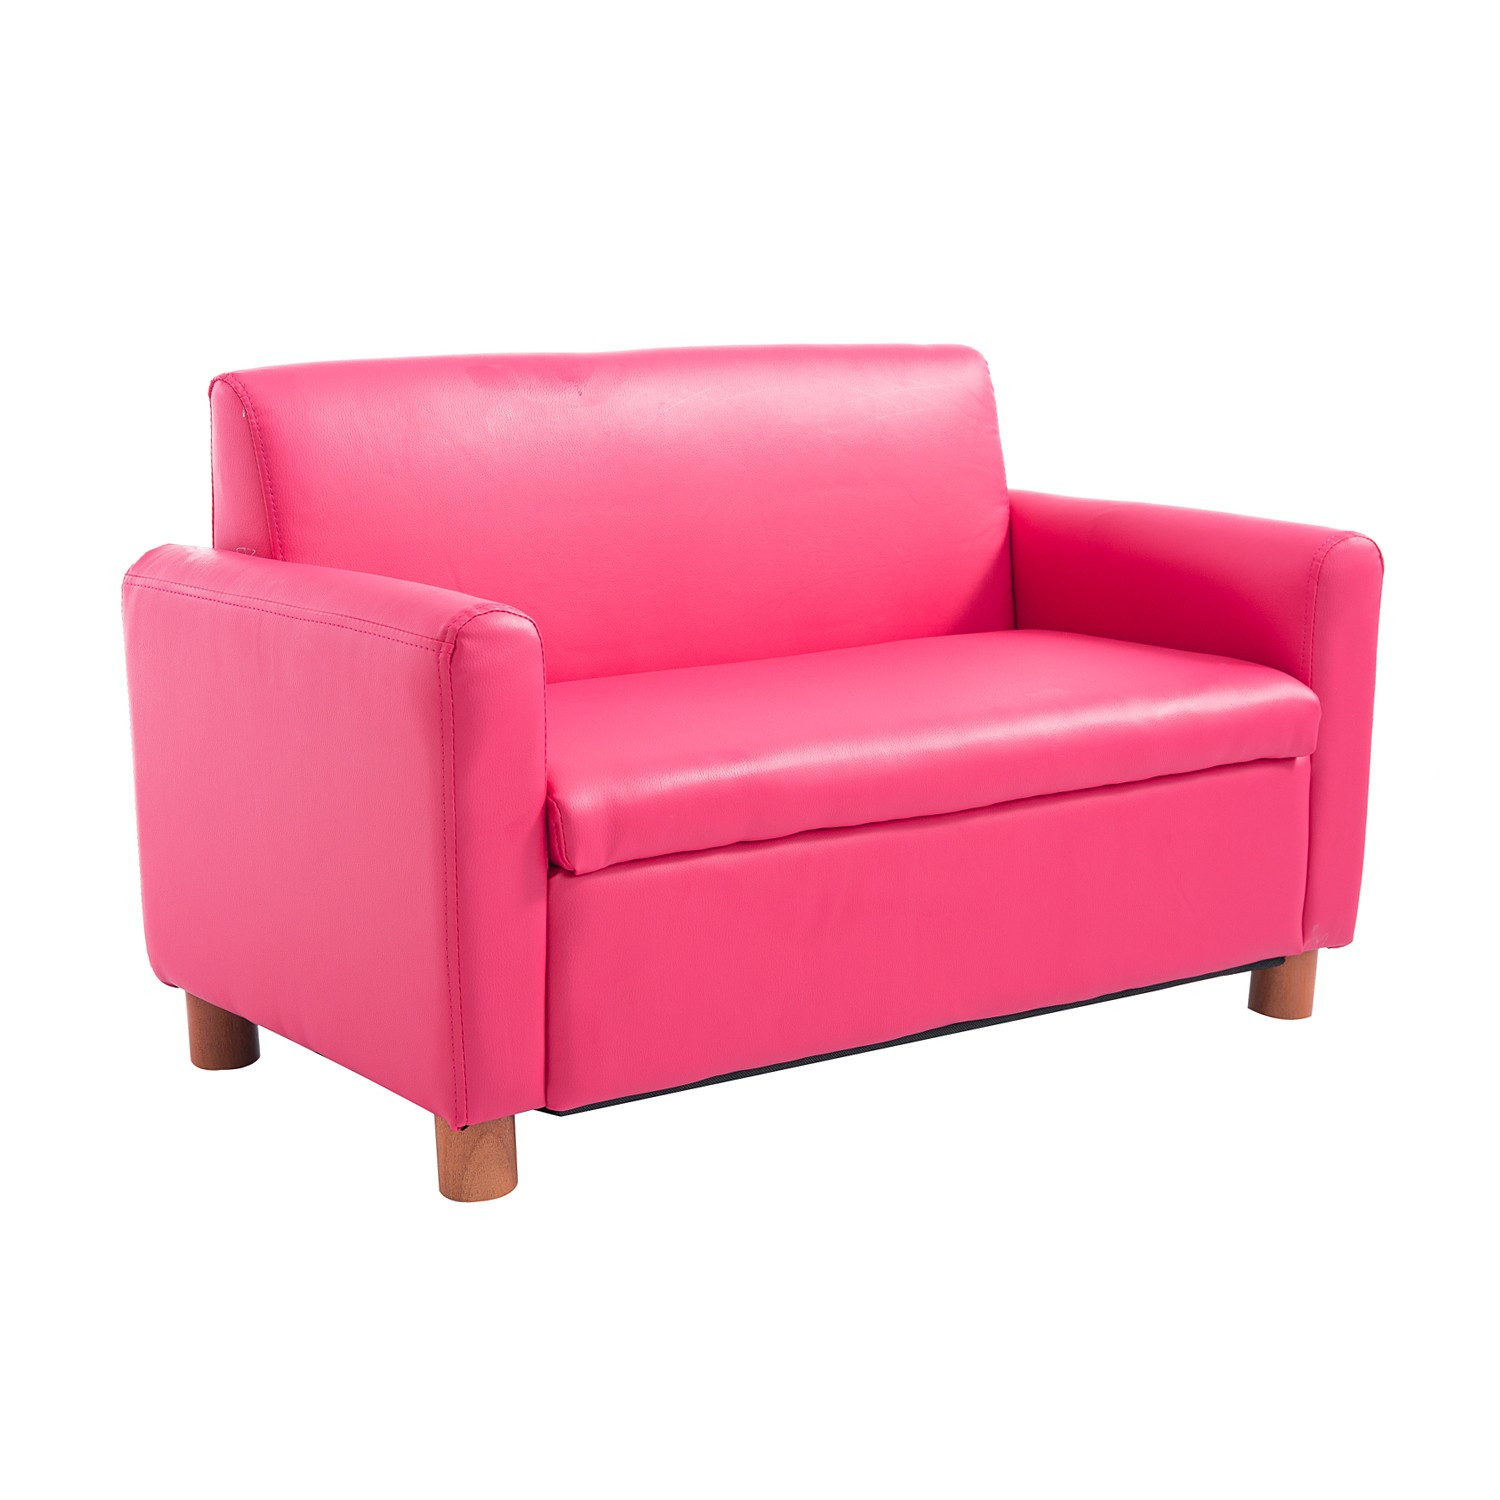 Kids Sofa And Chair
 Hom 33" Kids PU Leather Storage Sofa Pink Chairs